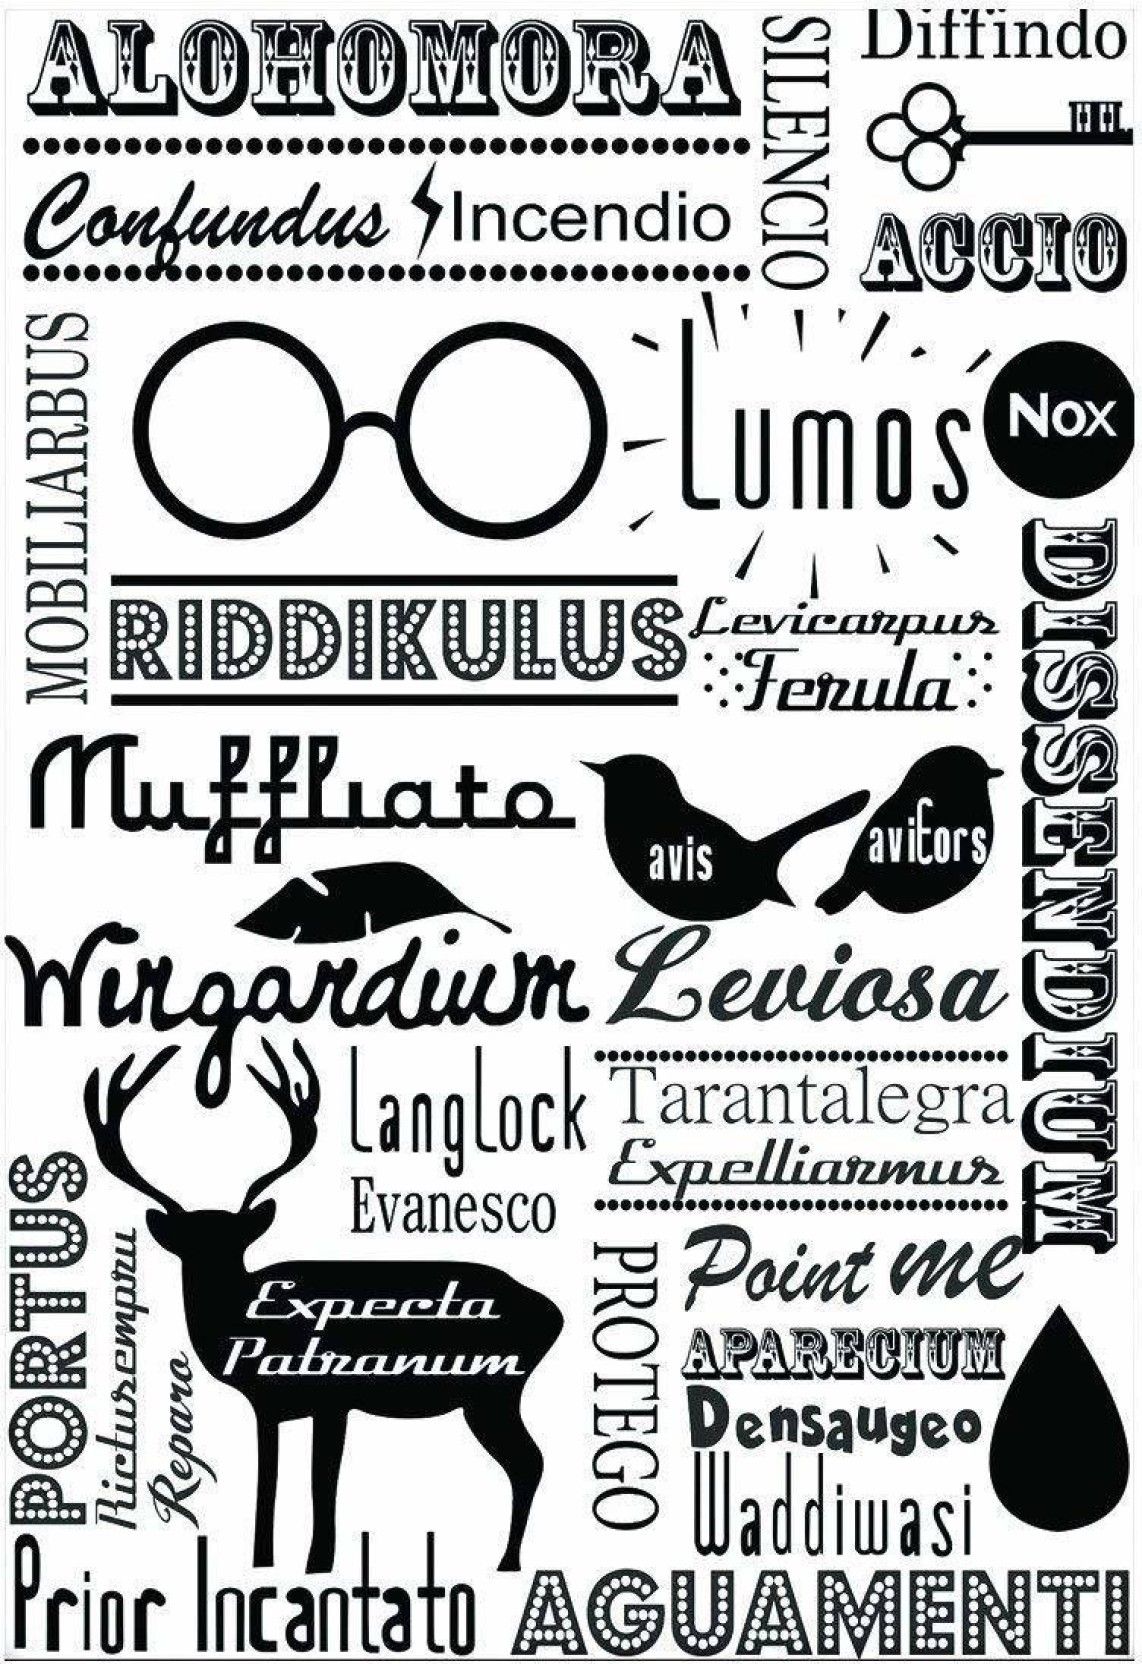 Harry Potter Wallpaper Alohomora